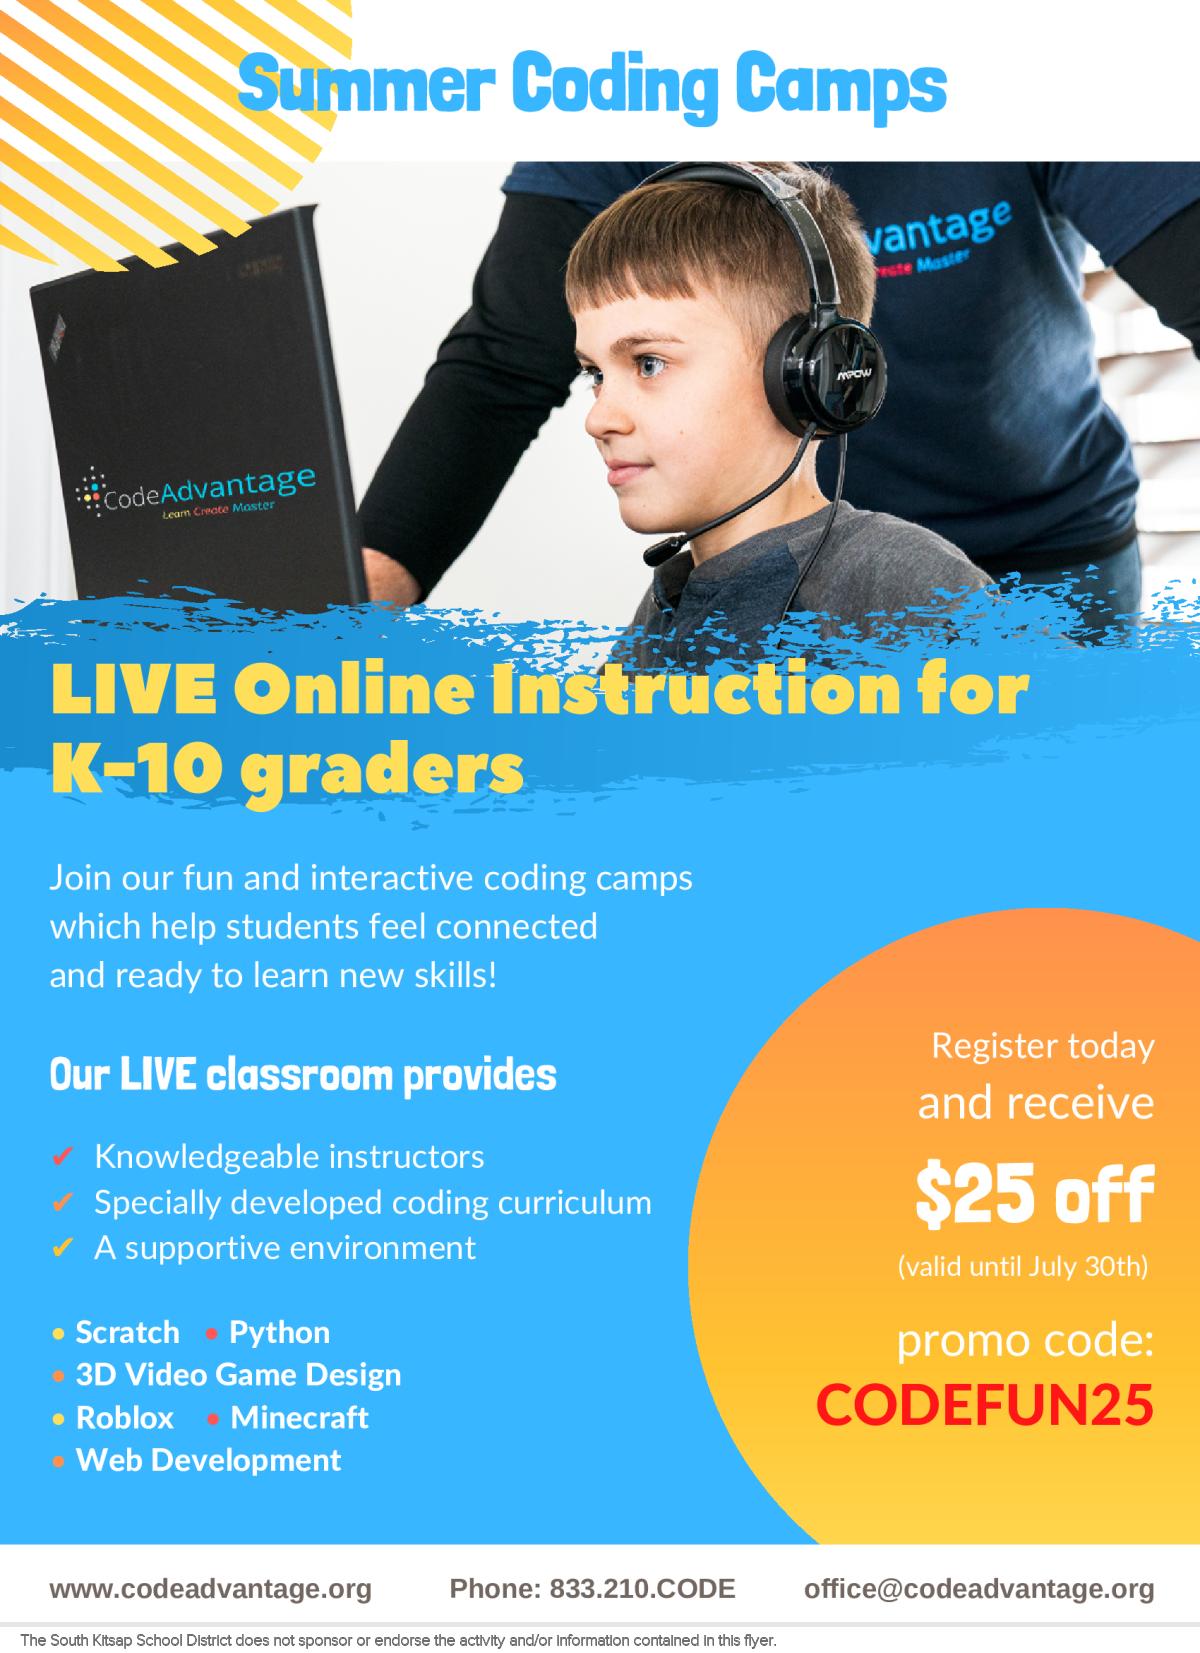 Online Summer Coding Camps For Kids